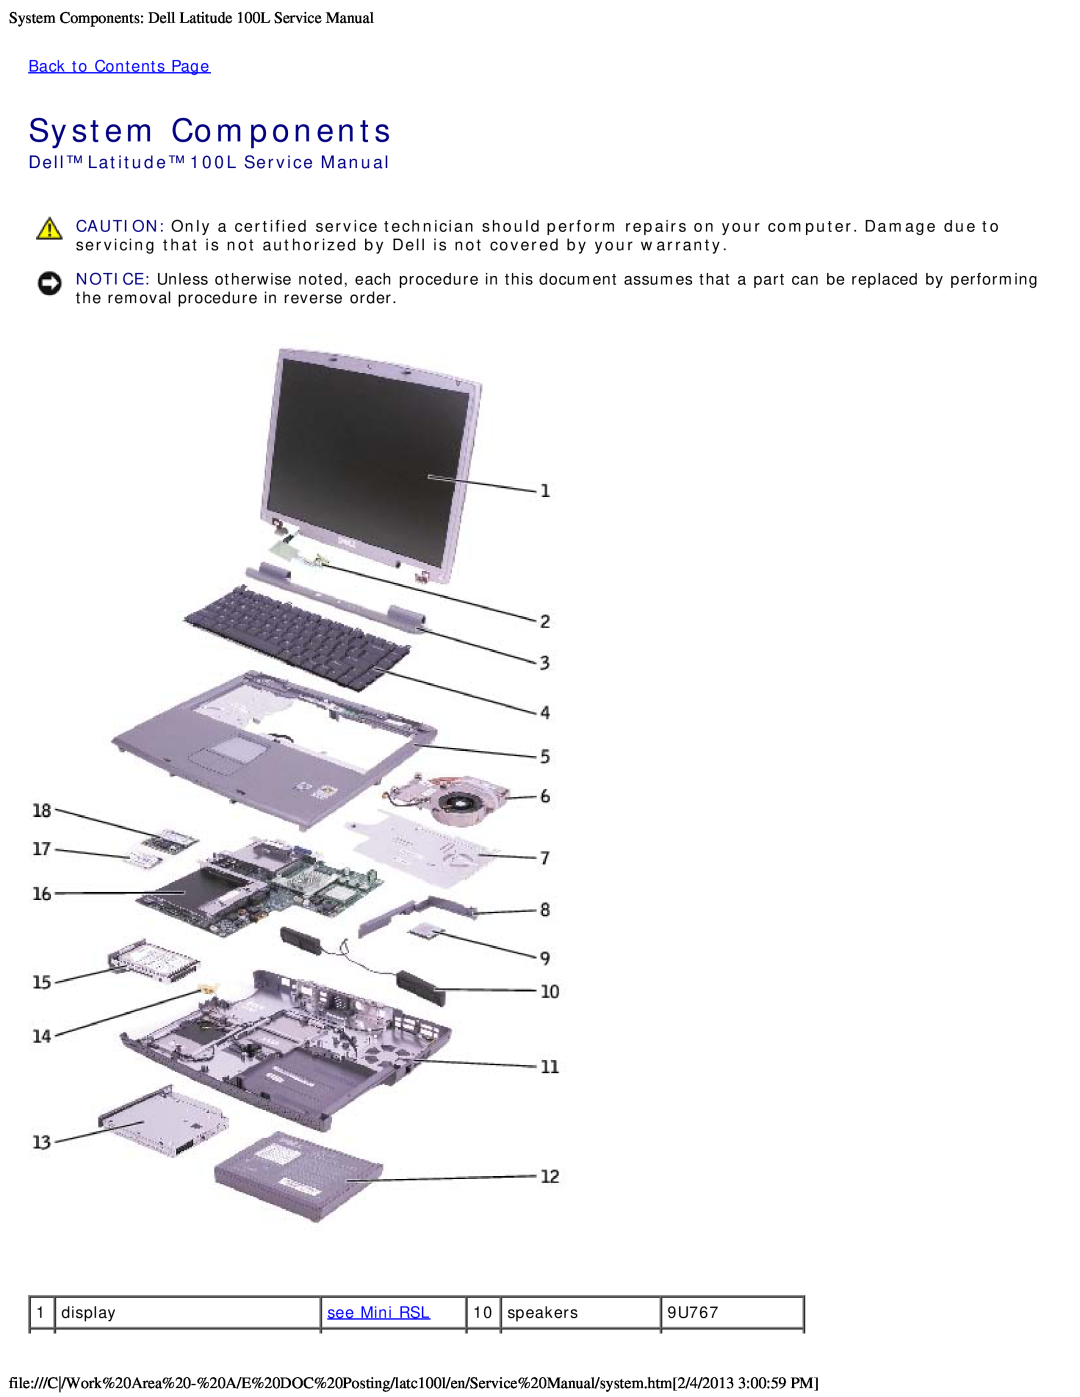 Dell service manual System Components Dell Latitude 100L Service Manual, Back to Contents Page, see Mini RSL, 9U767 